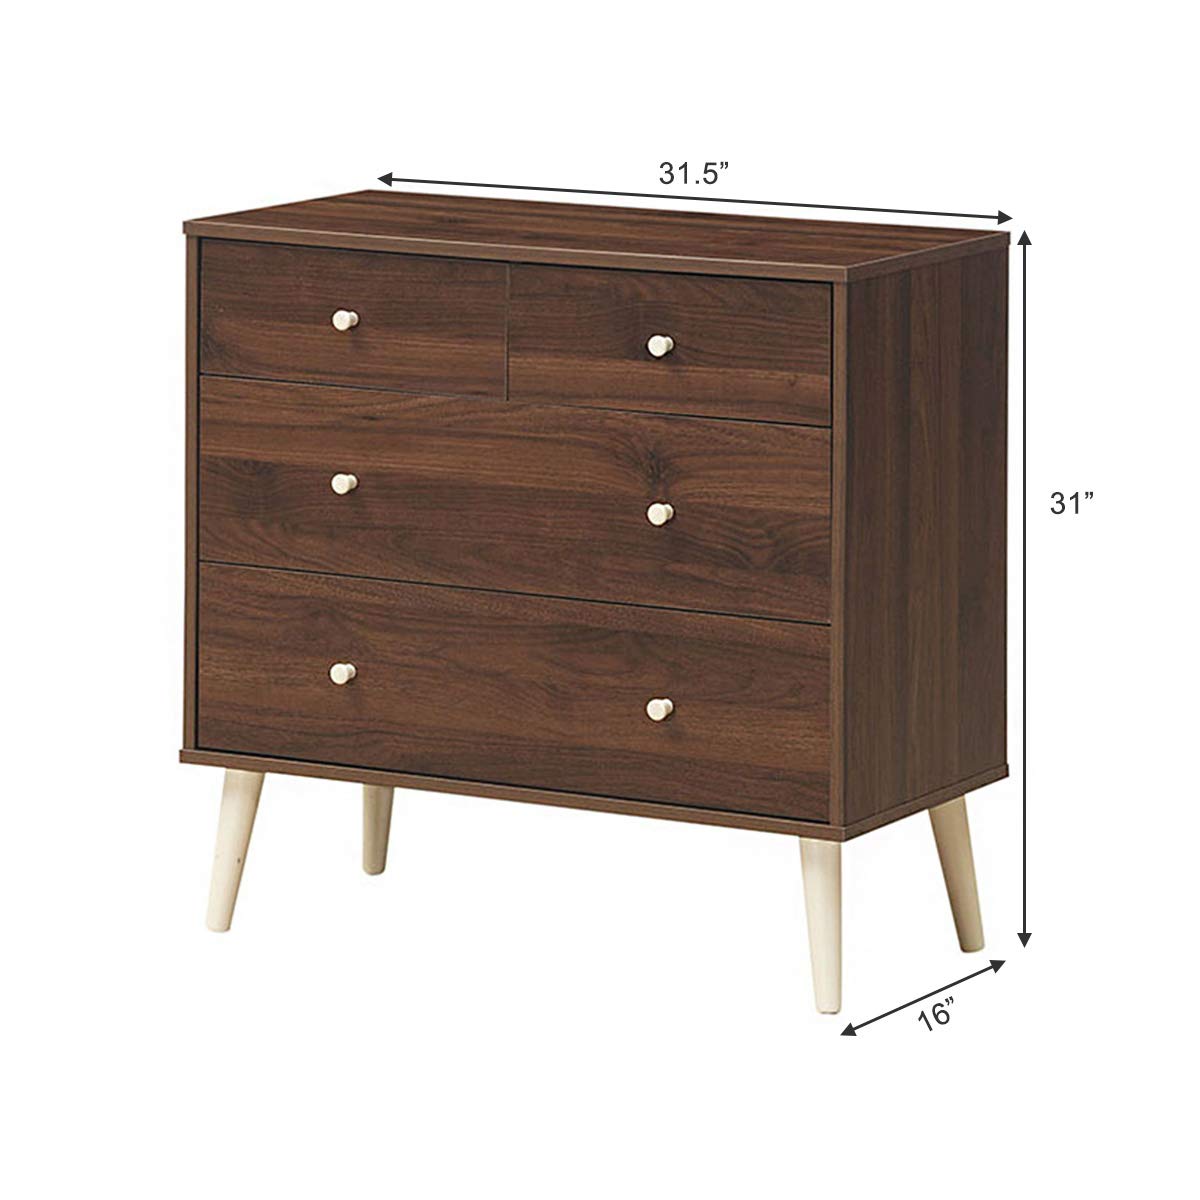 Giantex 4-Drawer Dresser, Free-Standing Chest Wood Legs and Sliding Rail